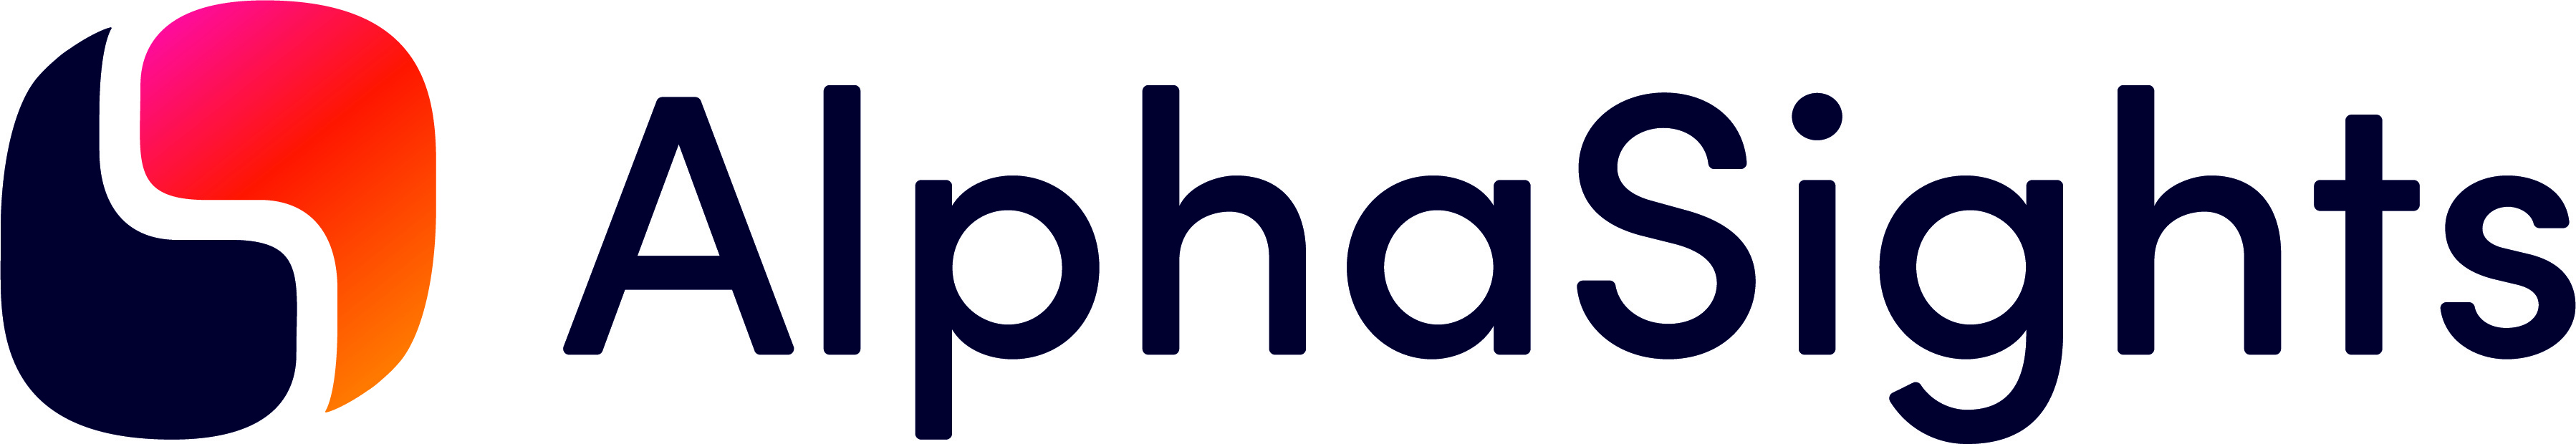 AlphaSights_logo